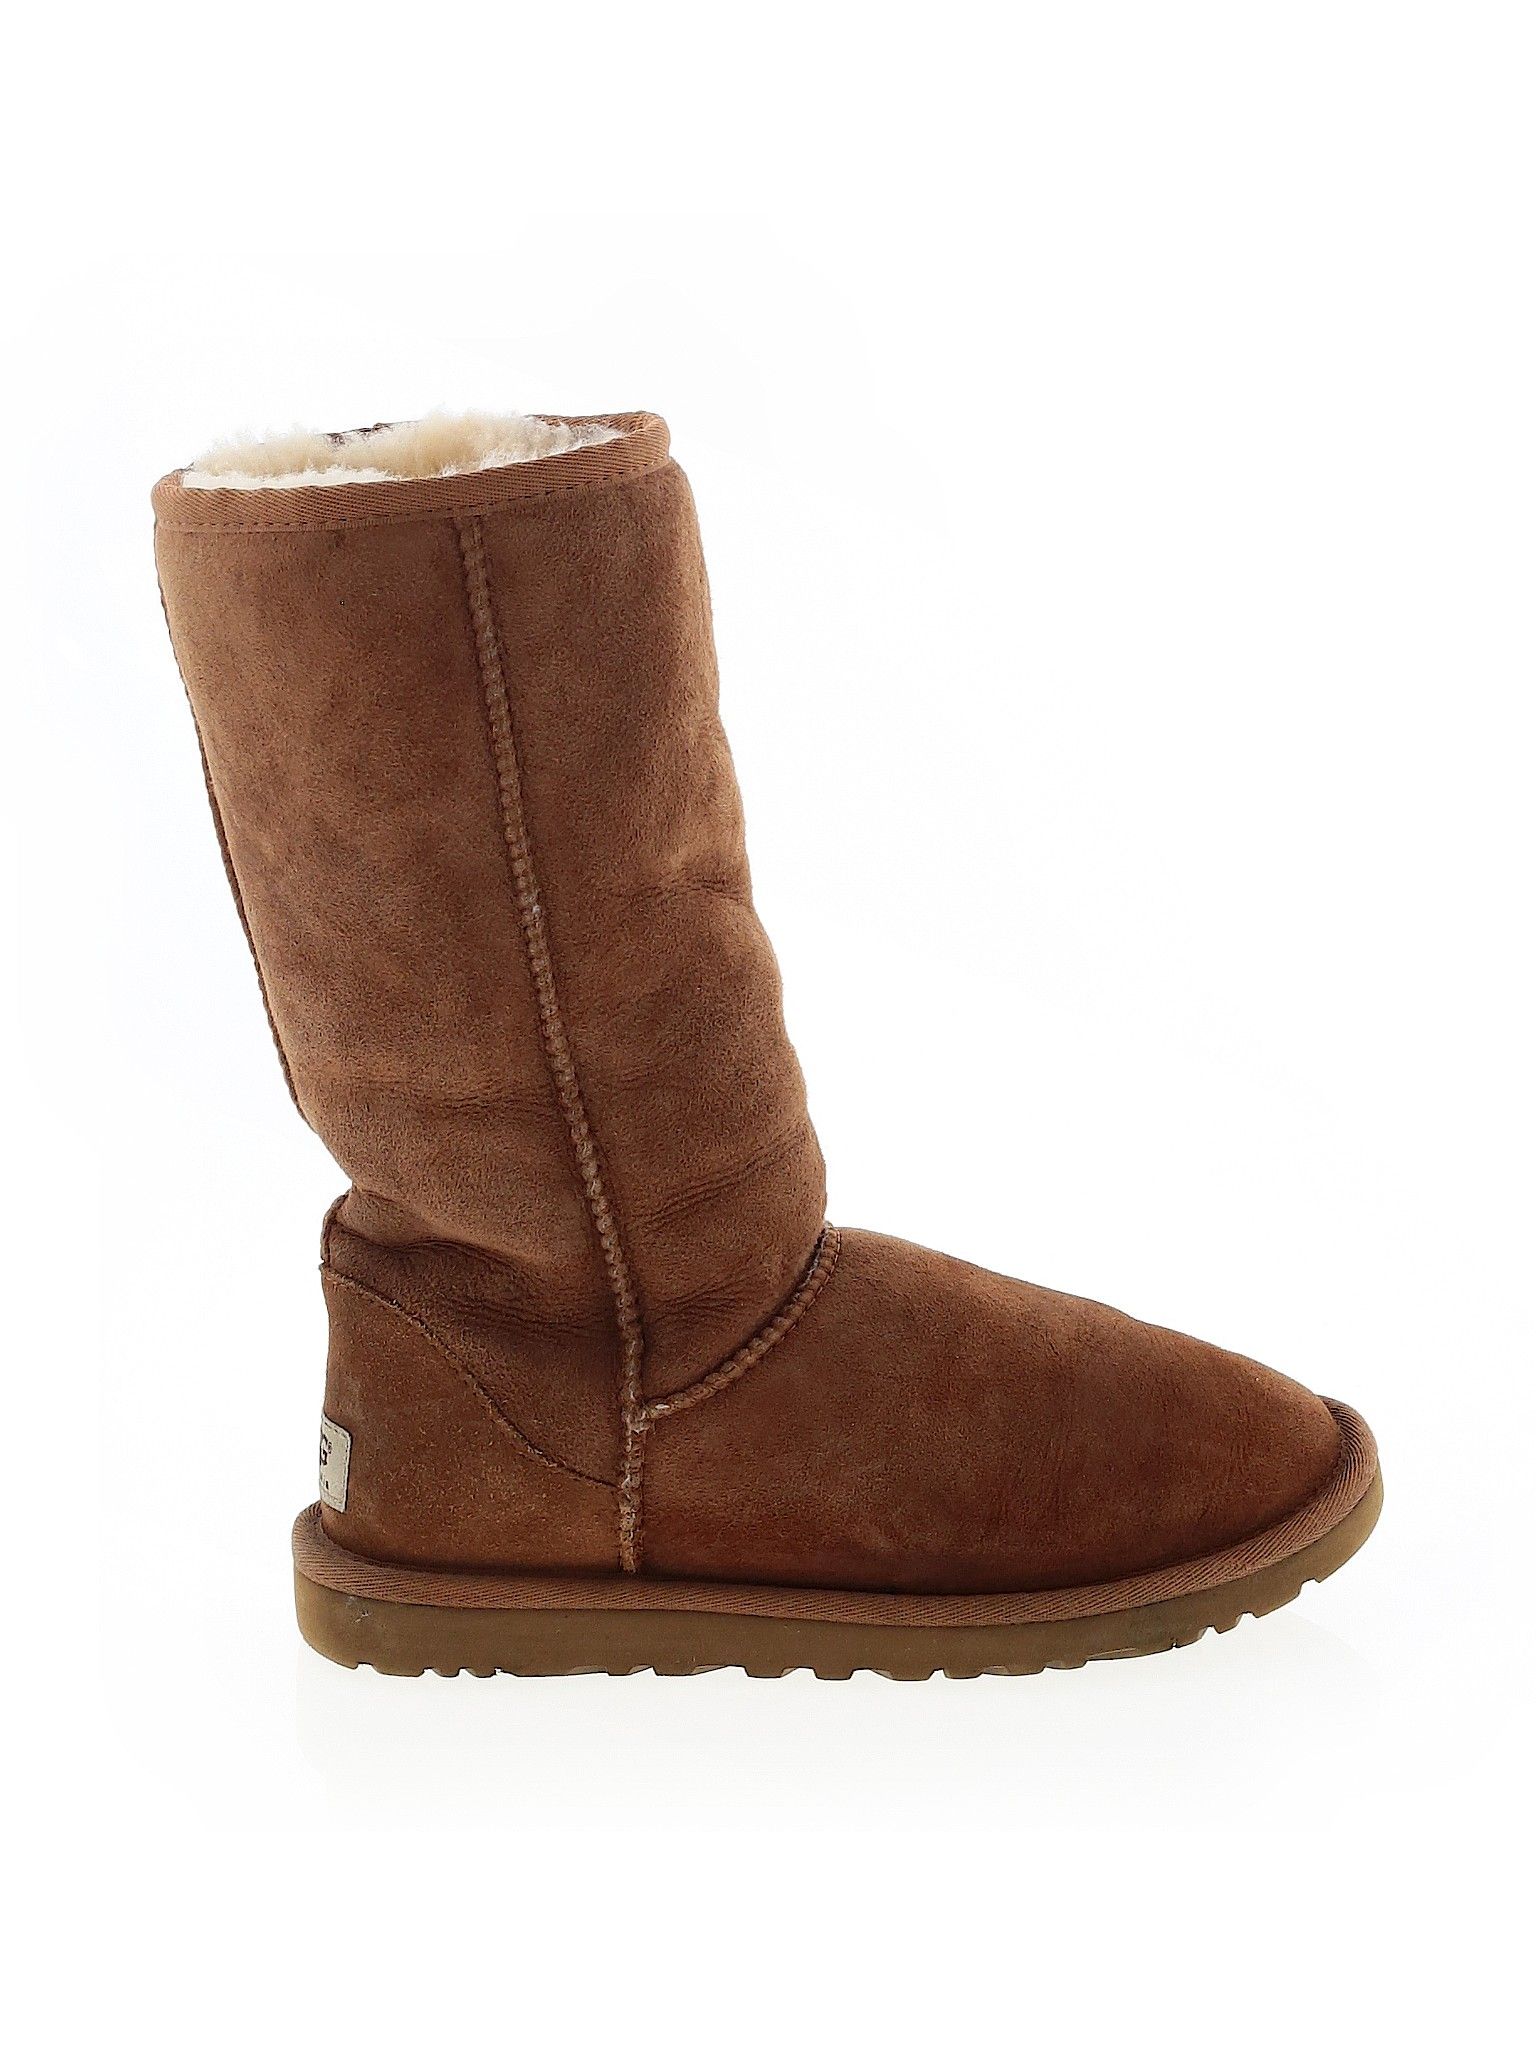 Ugg Australia Boots Size 5: Brown Women's Clothing - 54944135 | thredUP